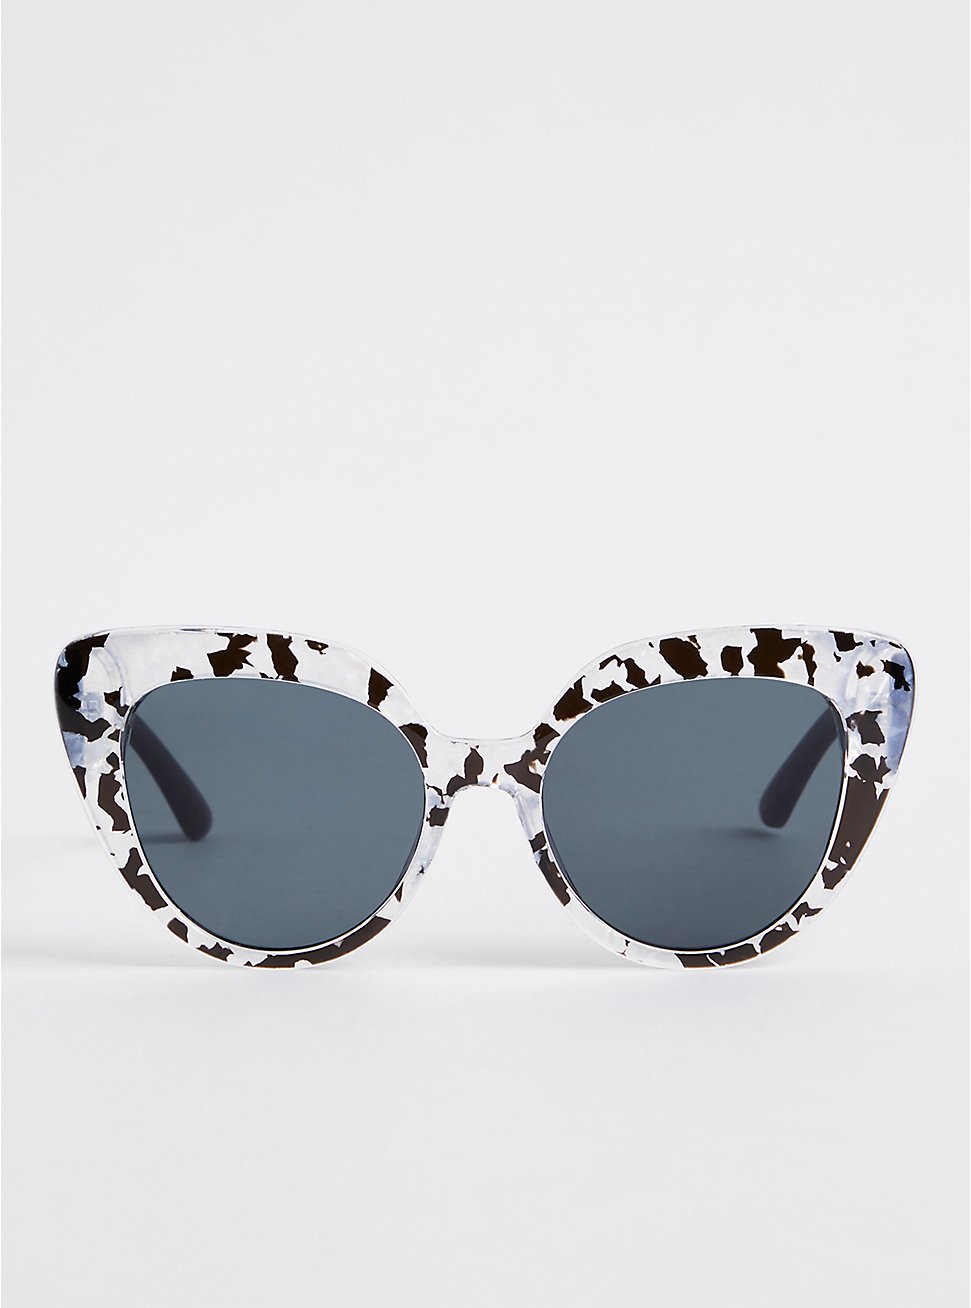 Cat Eye Sunglasses with Smoke Lens - Black & White, , hi-res